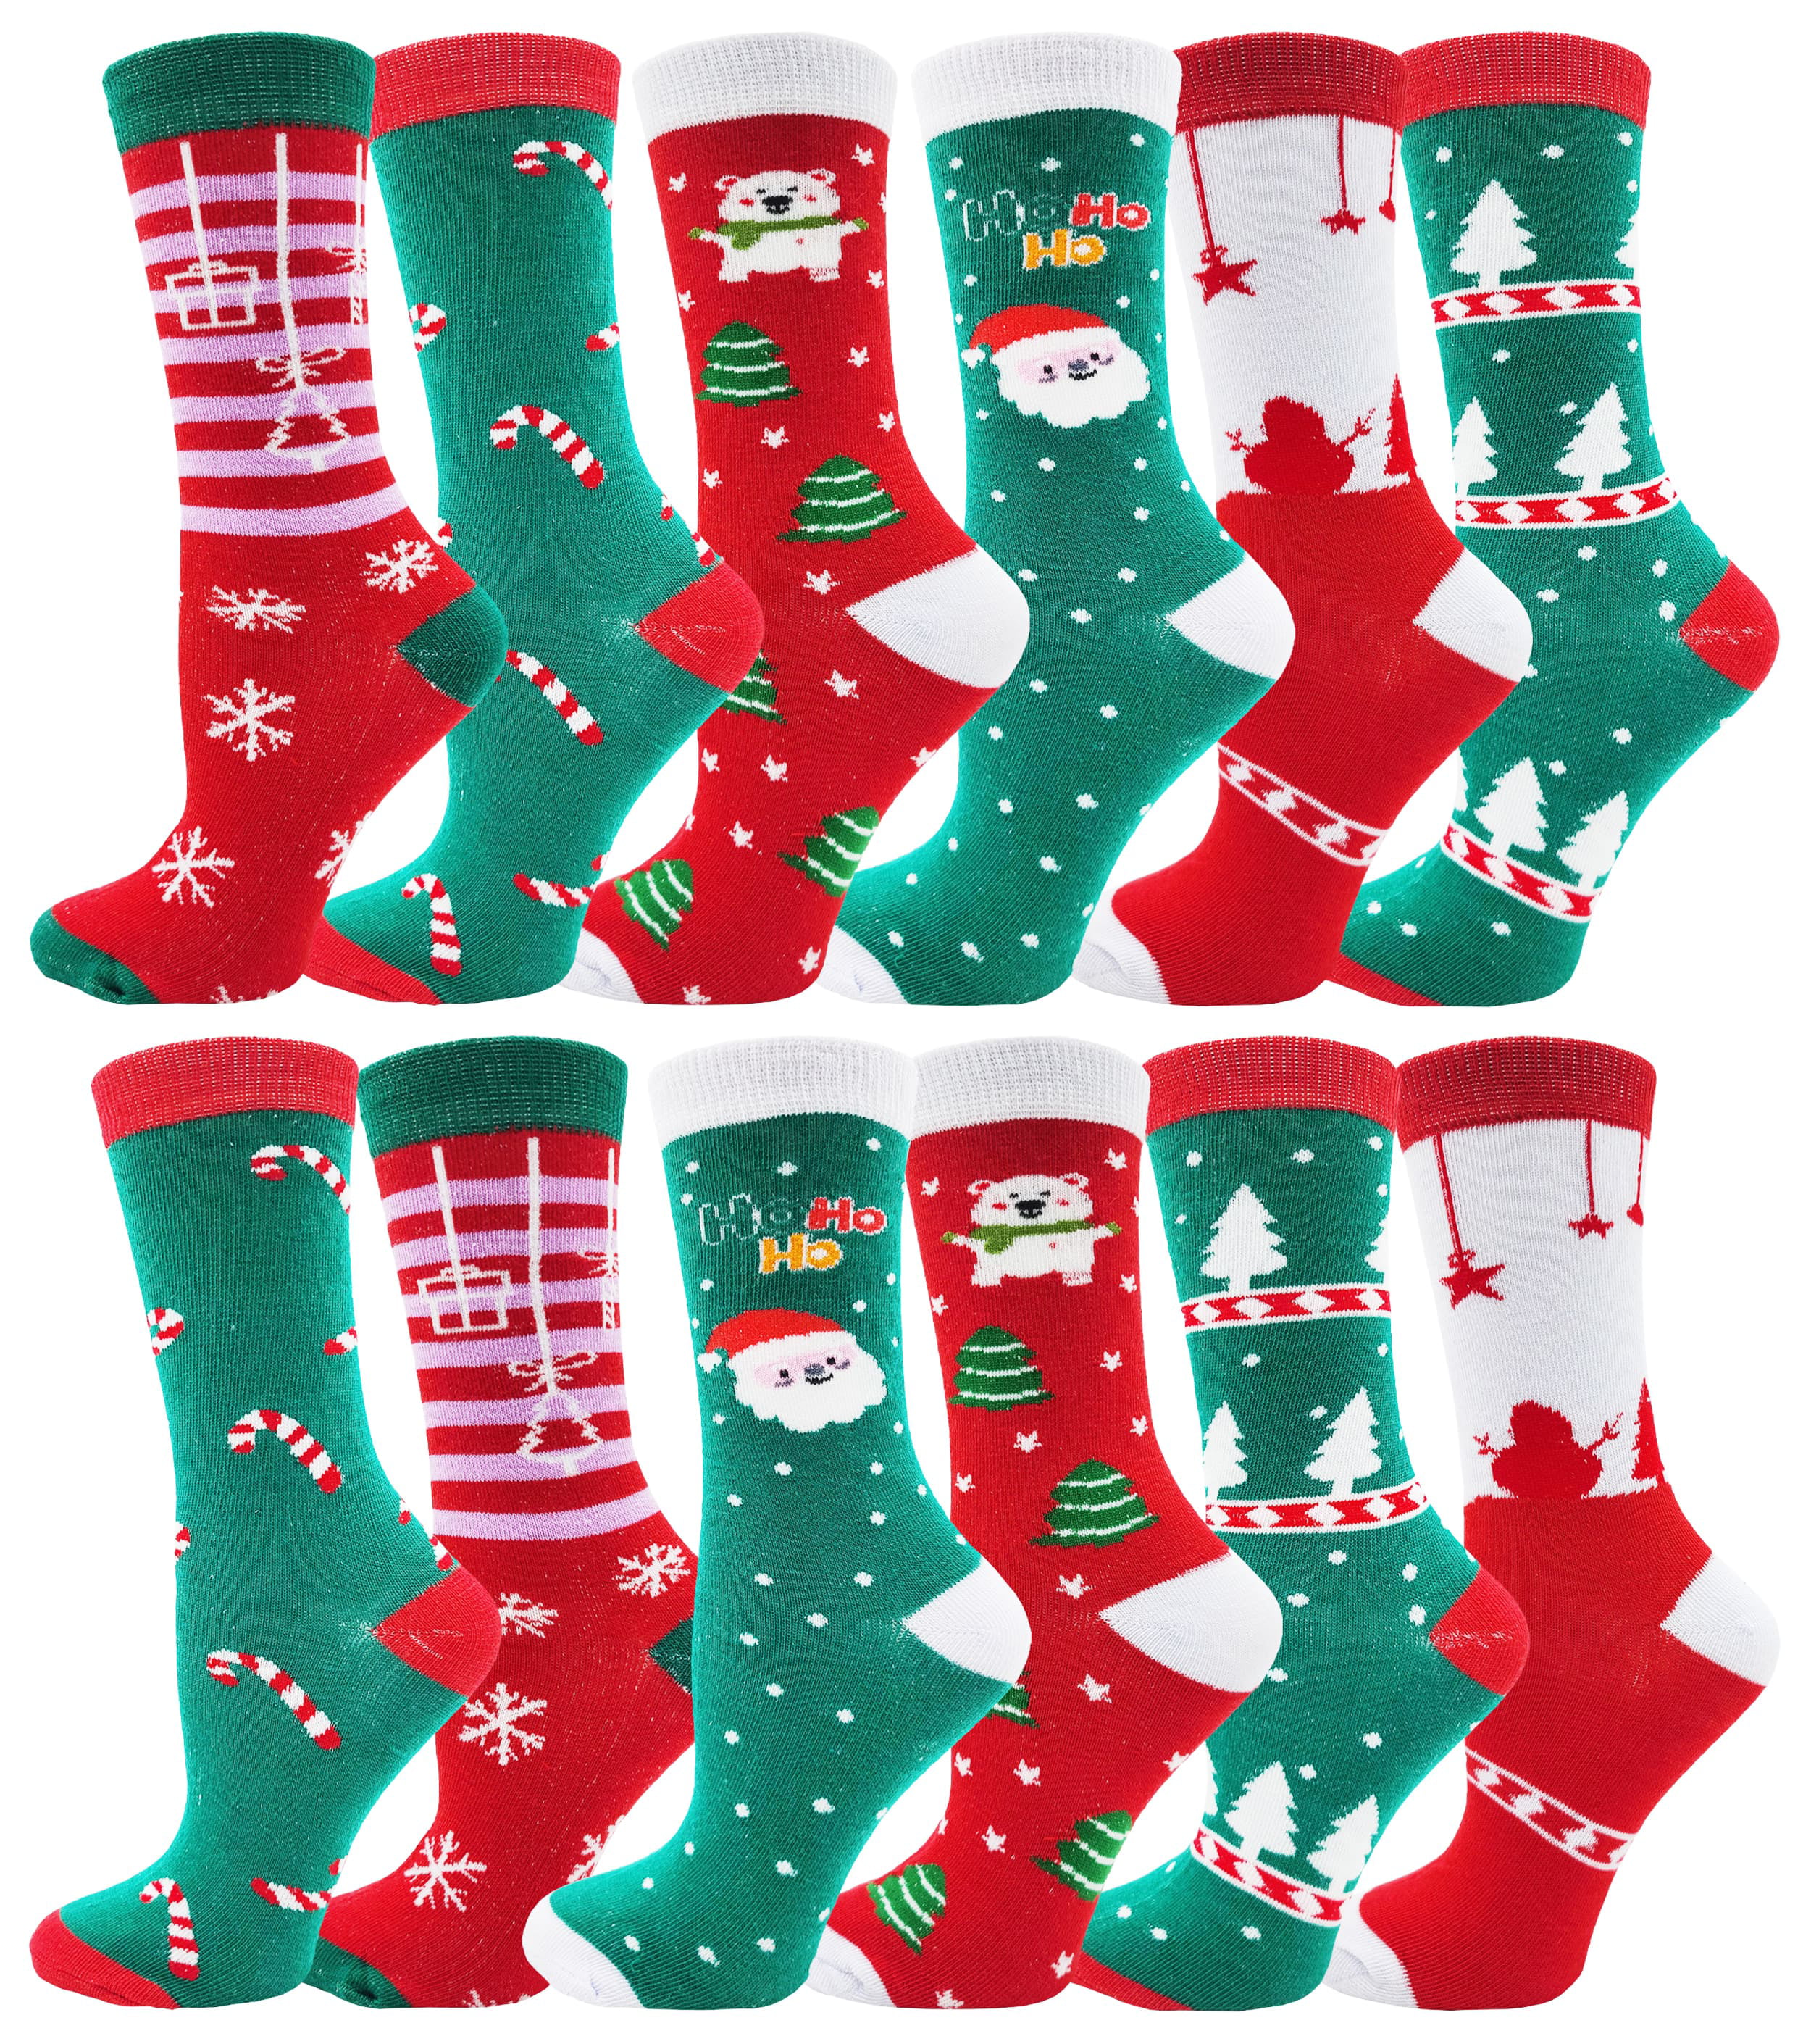 1/12Pairs Women's Christmas Socks Cotton Knit Long Socks for Girls Novelty Christmas Gifts,Cozy Funny Xmas Holiday Socks